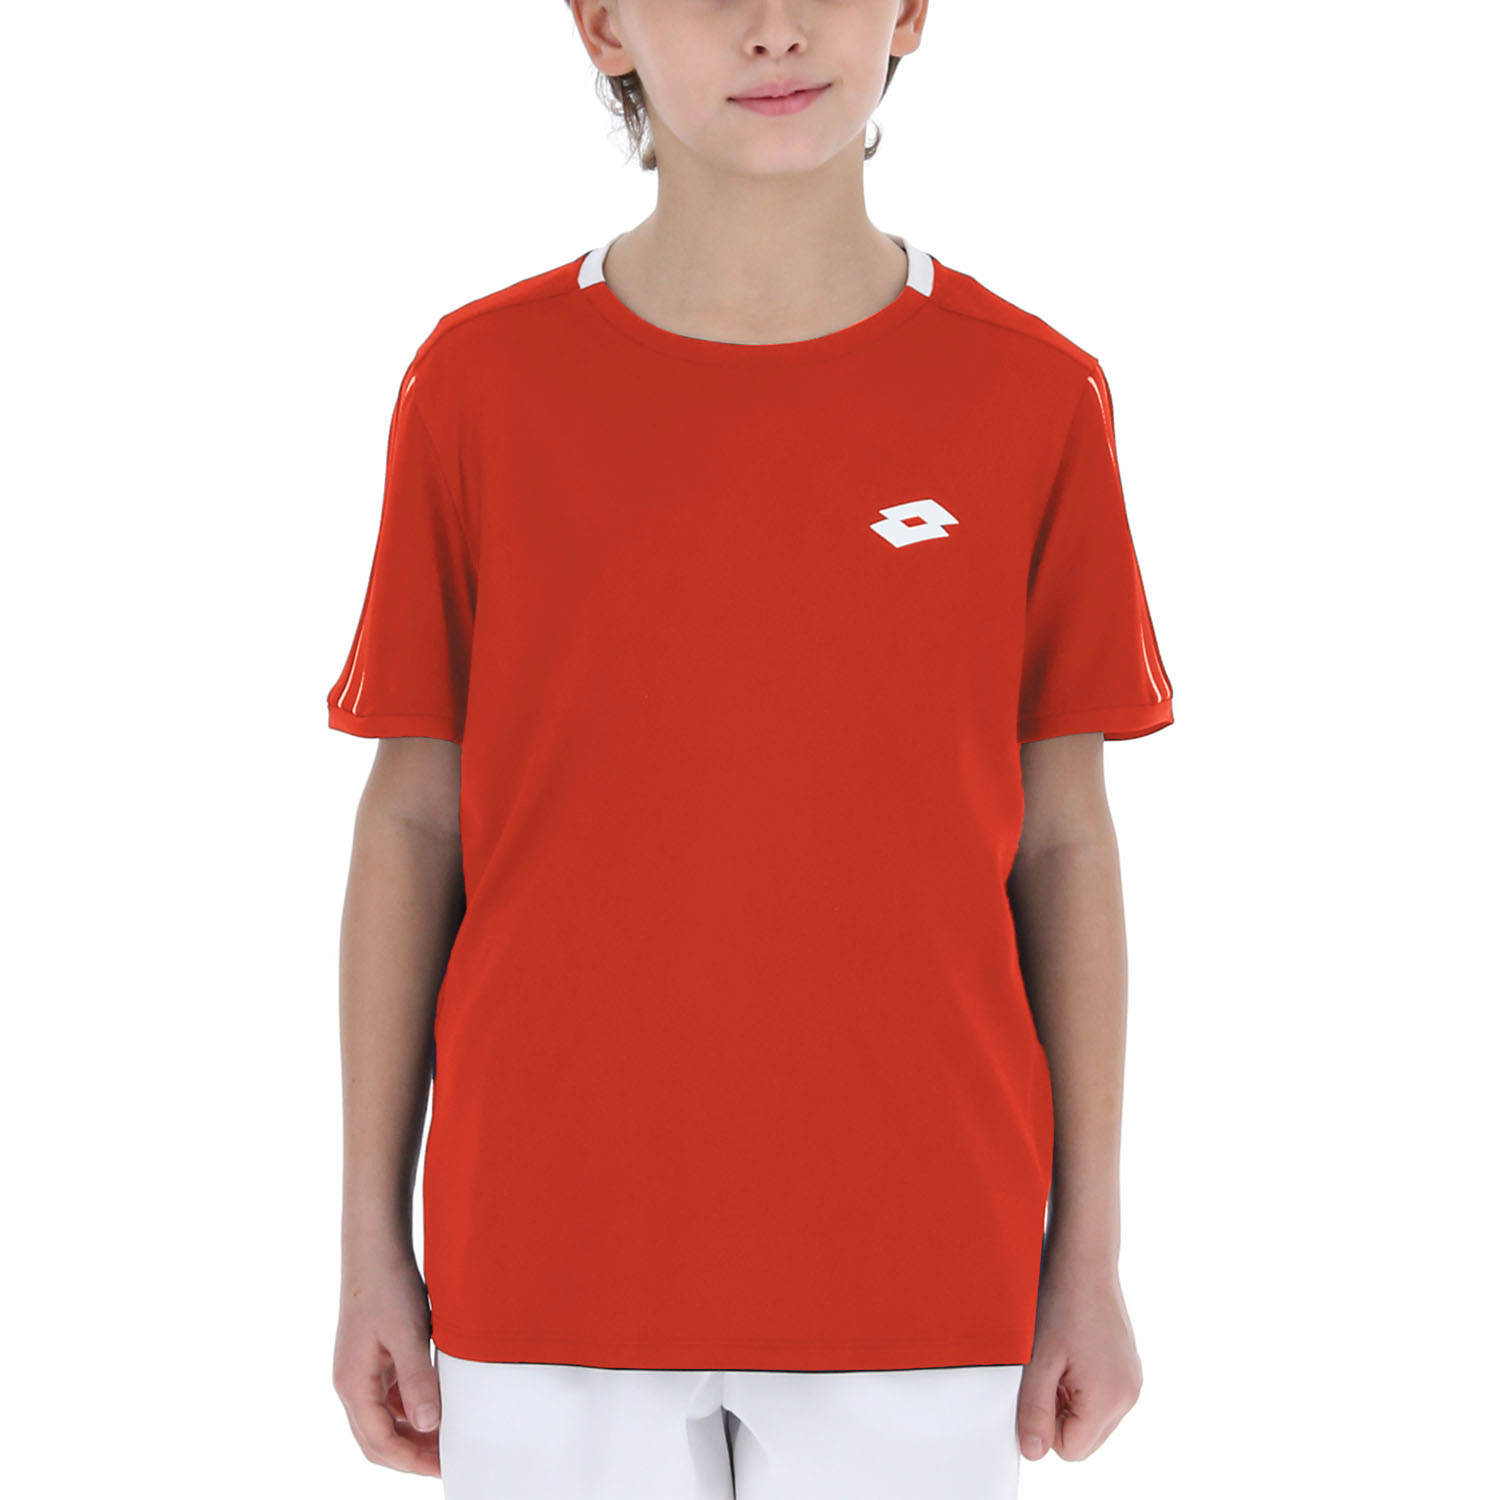 Lotto Squadra II Camiseta Niño - Cliff Red